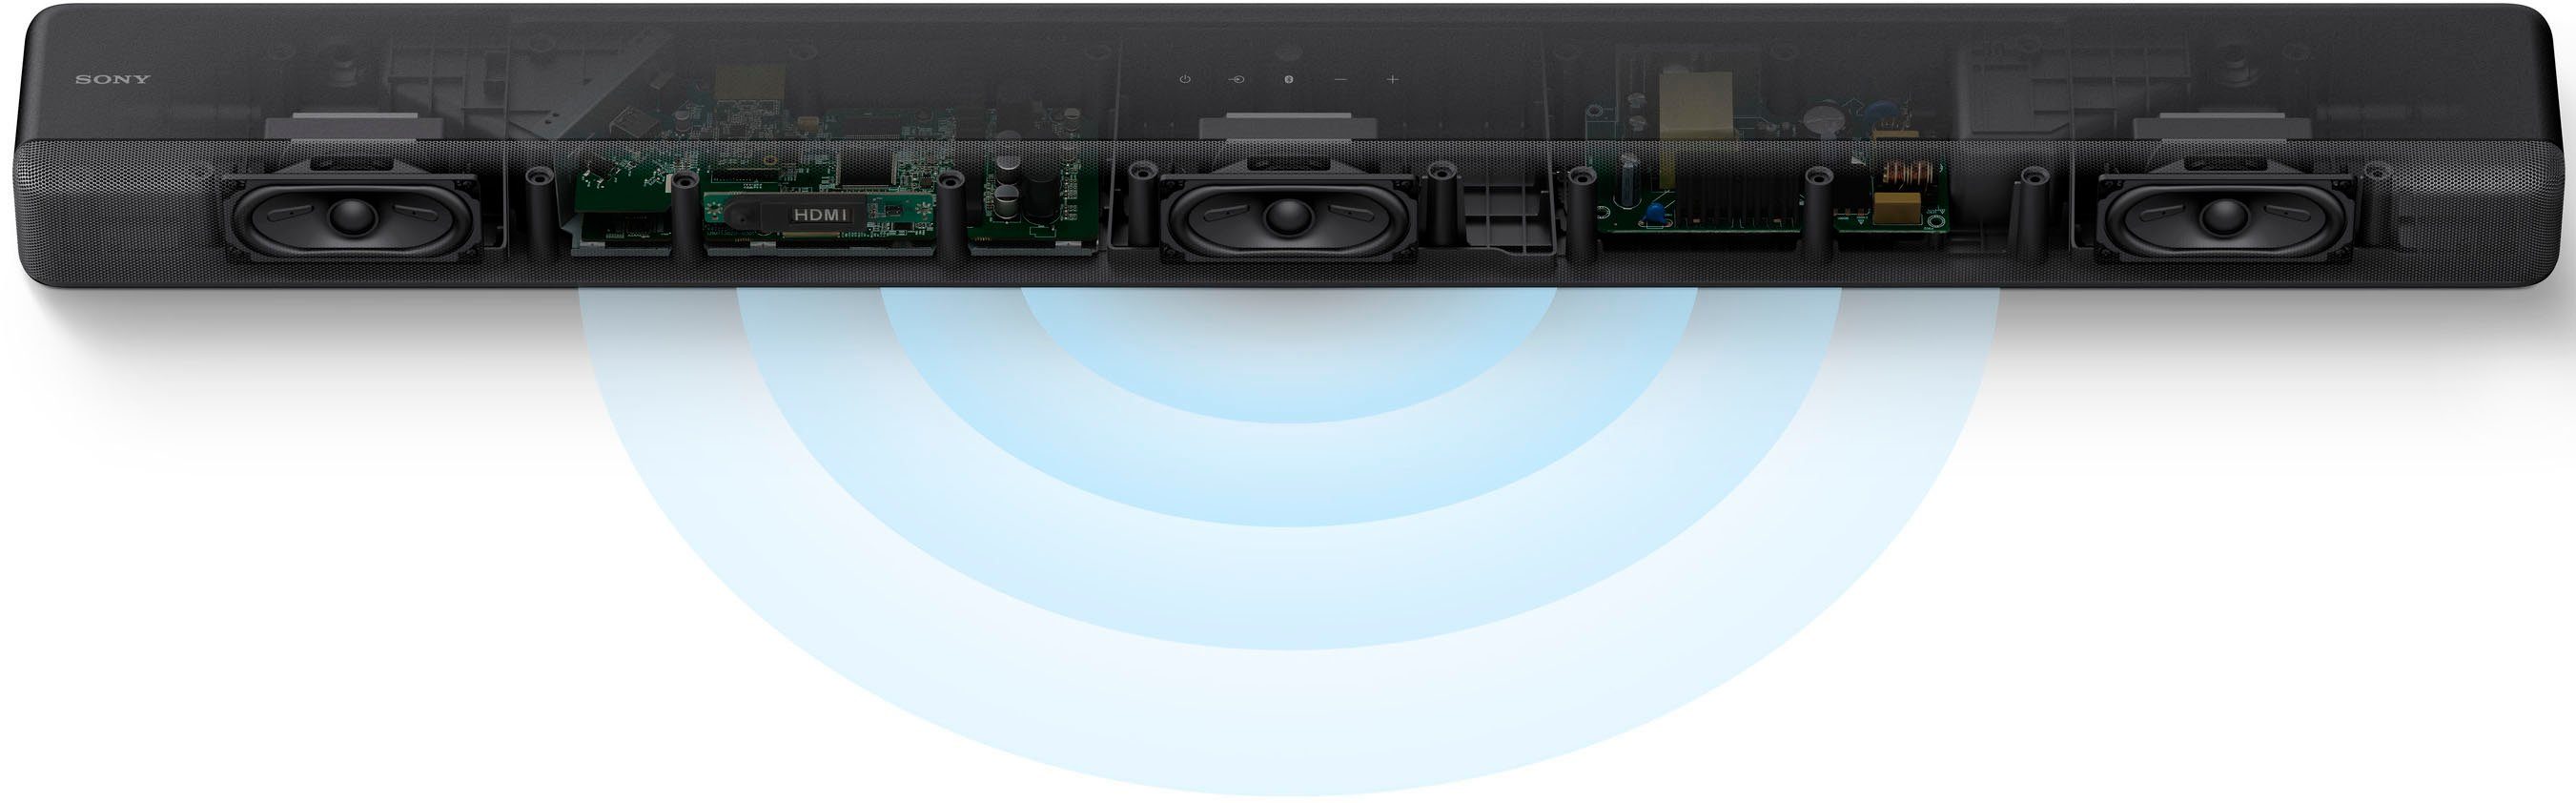 HT-G700 Soundbar 400 Sony 3.1 W, Subwoofer, mit Dolby Atmos) (Bluetooth,